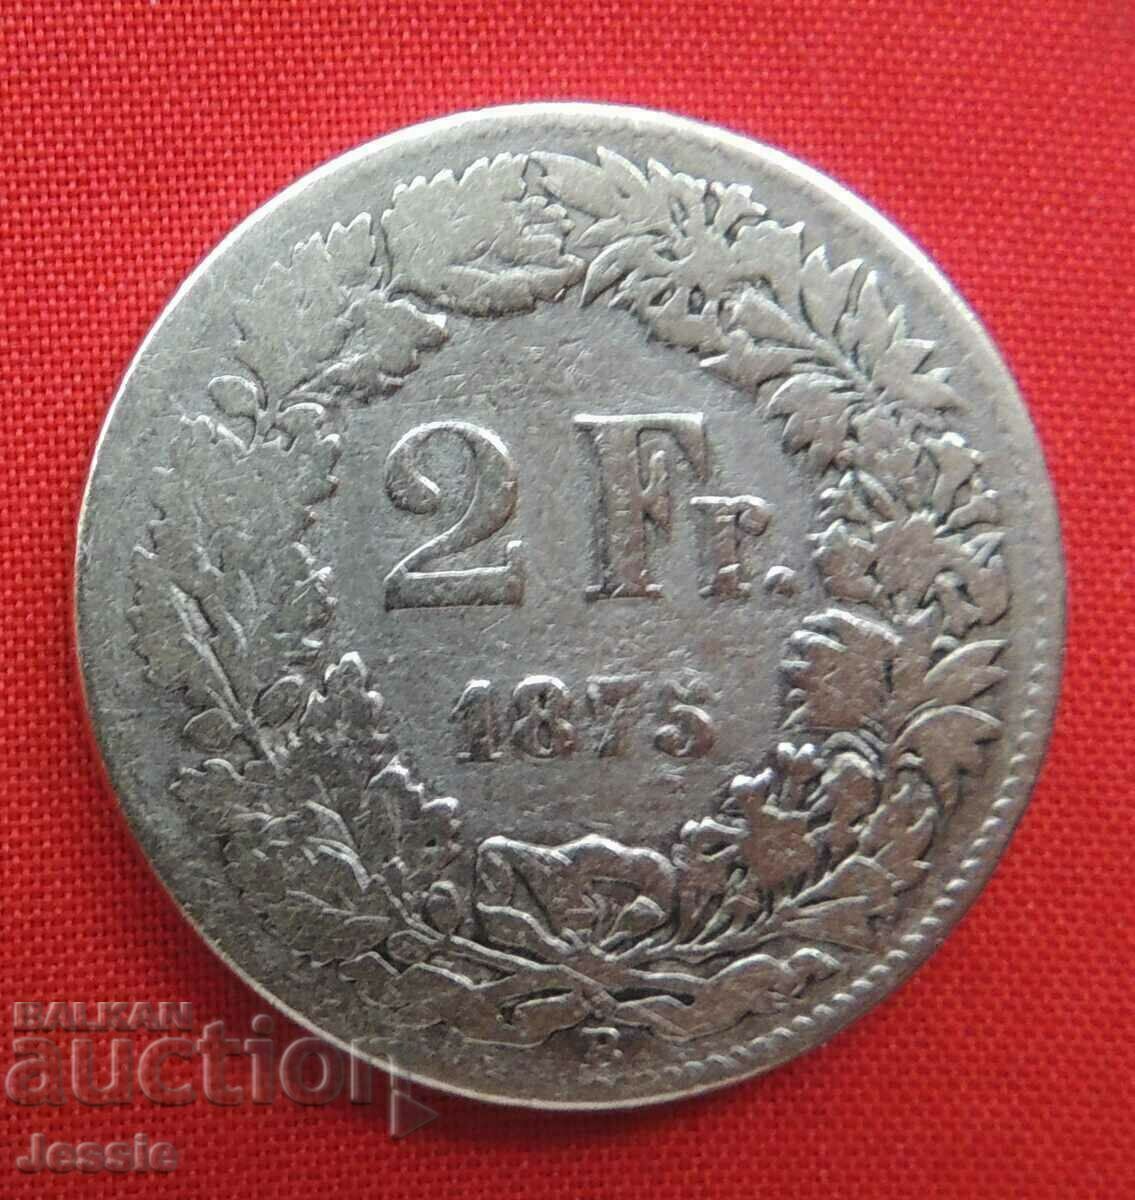 2 Francs 1875 B Switzerland Silver